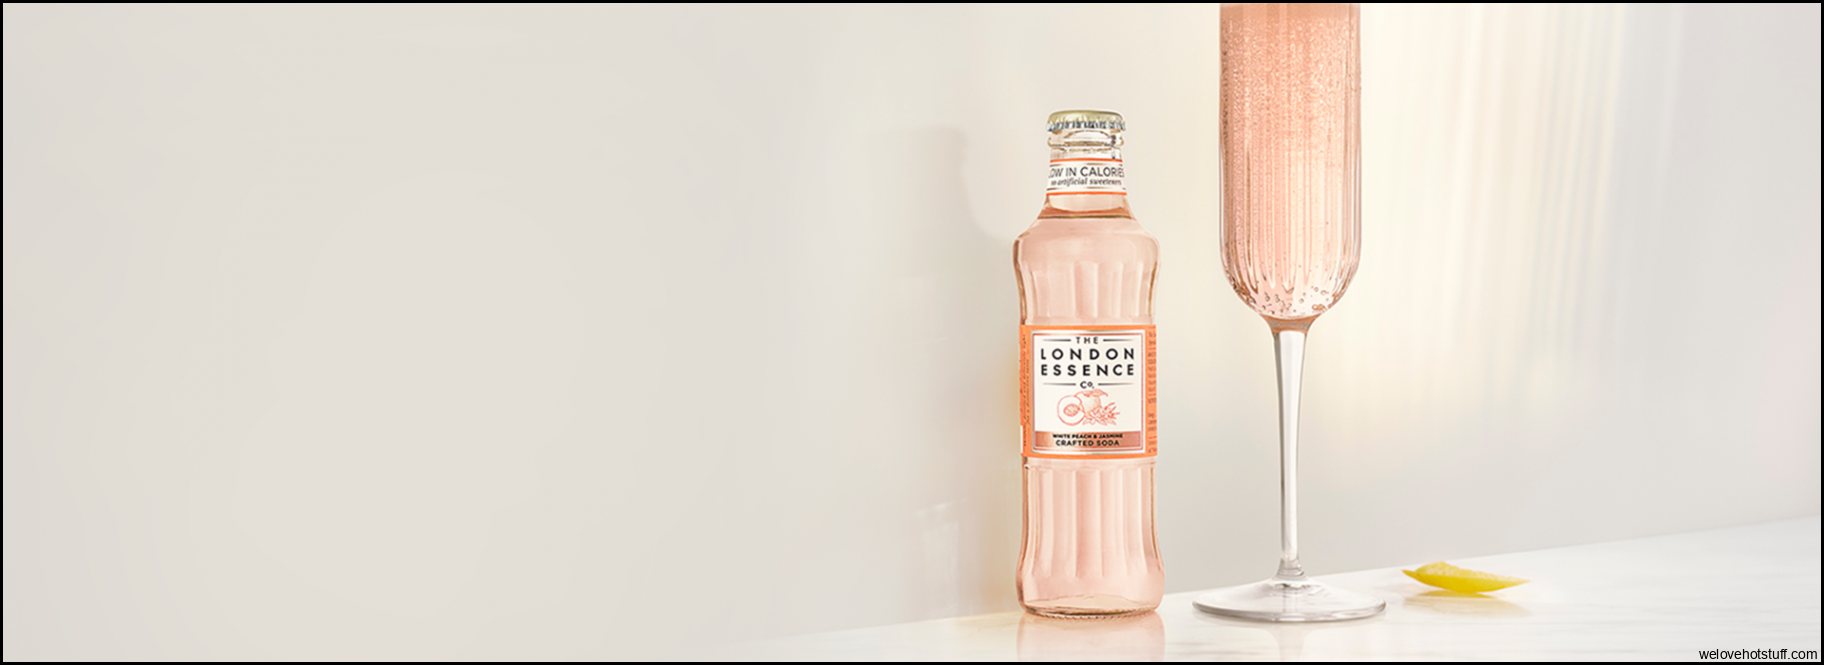 White Peach & Jasmine Crafted Soda | The London Essence Co.